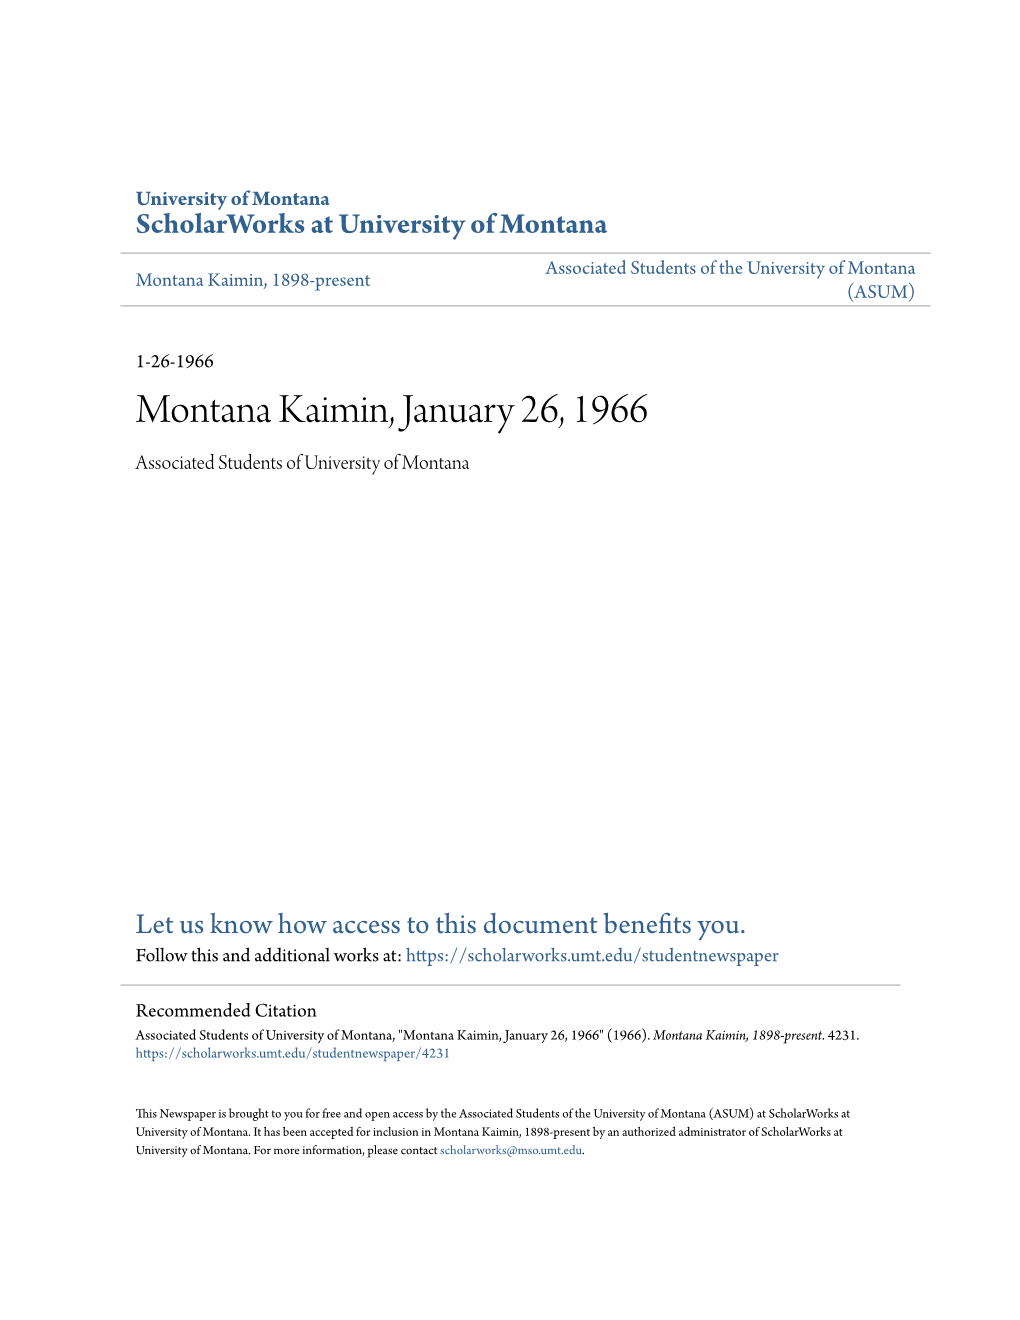 Montana Kaimin, January 26, 1966 Associated Students of University of Montana